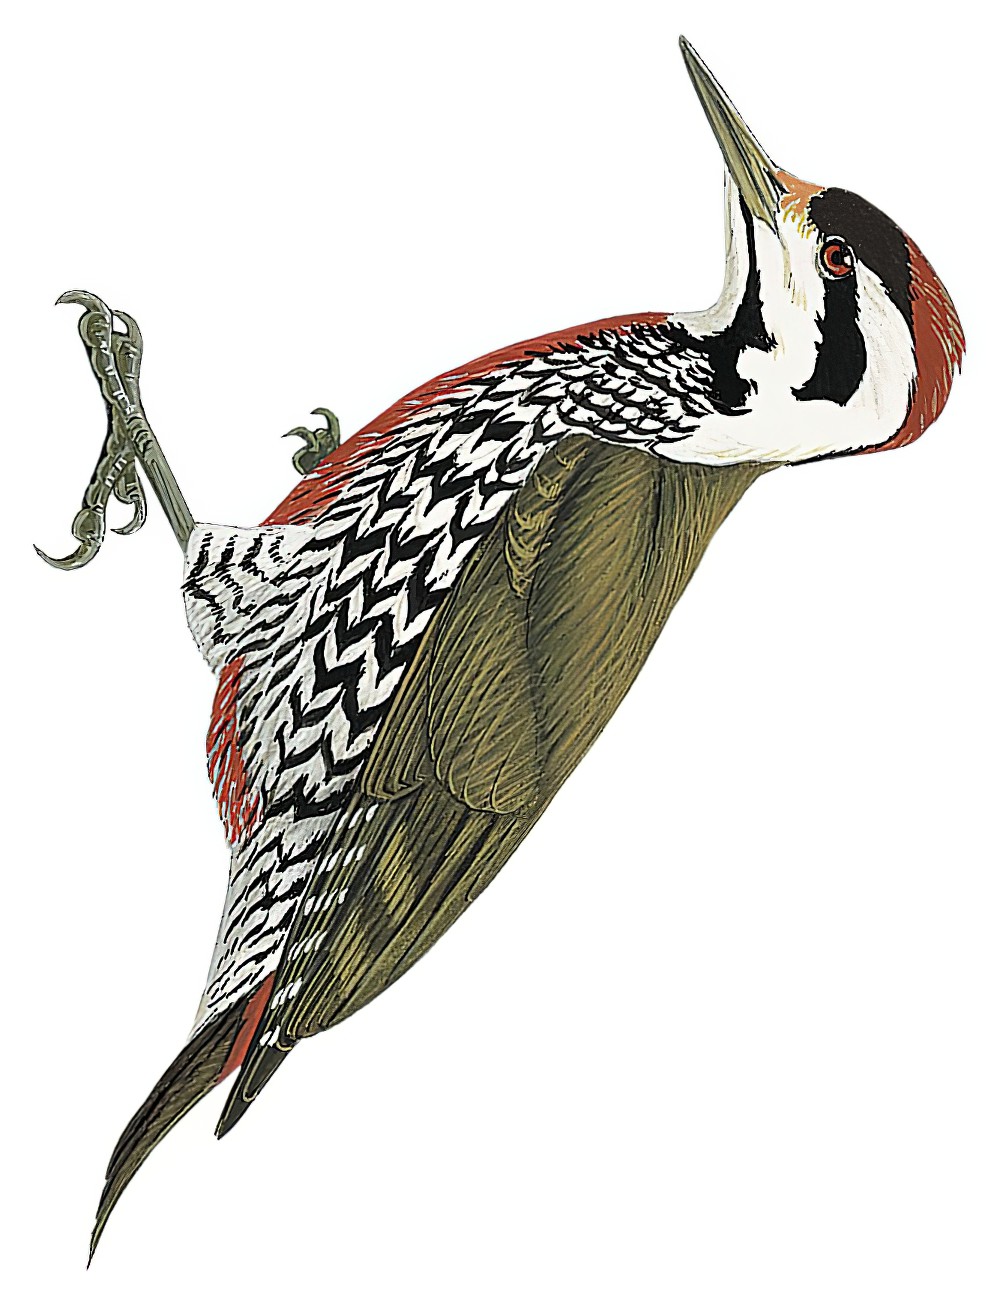 Fire-bellied Woodpecker / Chloropicus pyrrhogaster